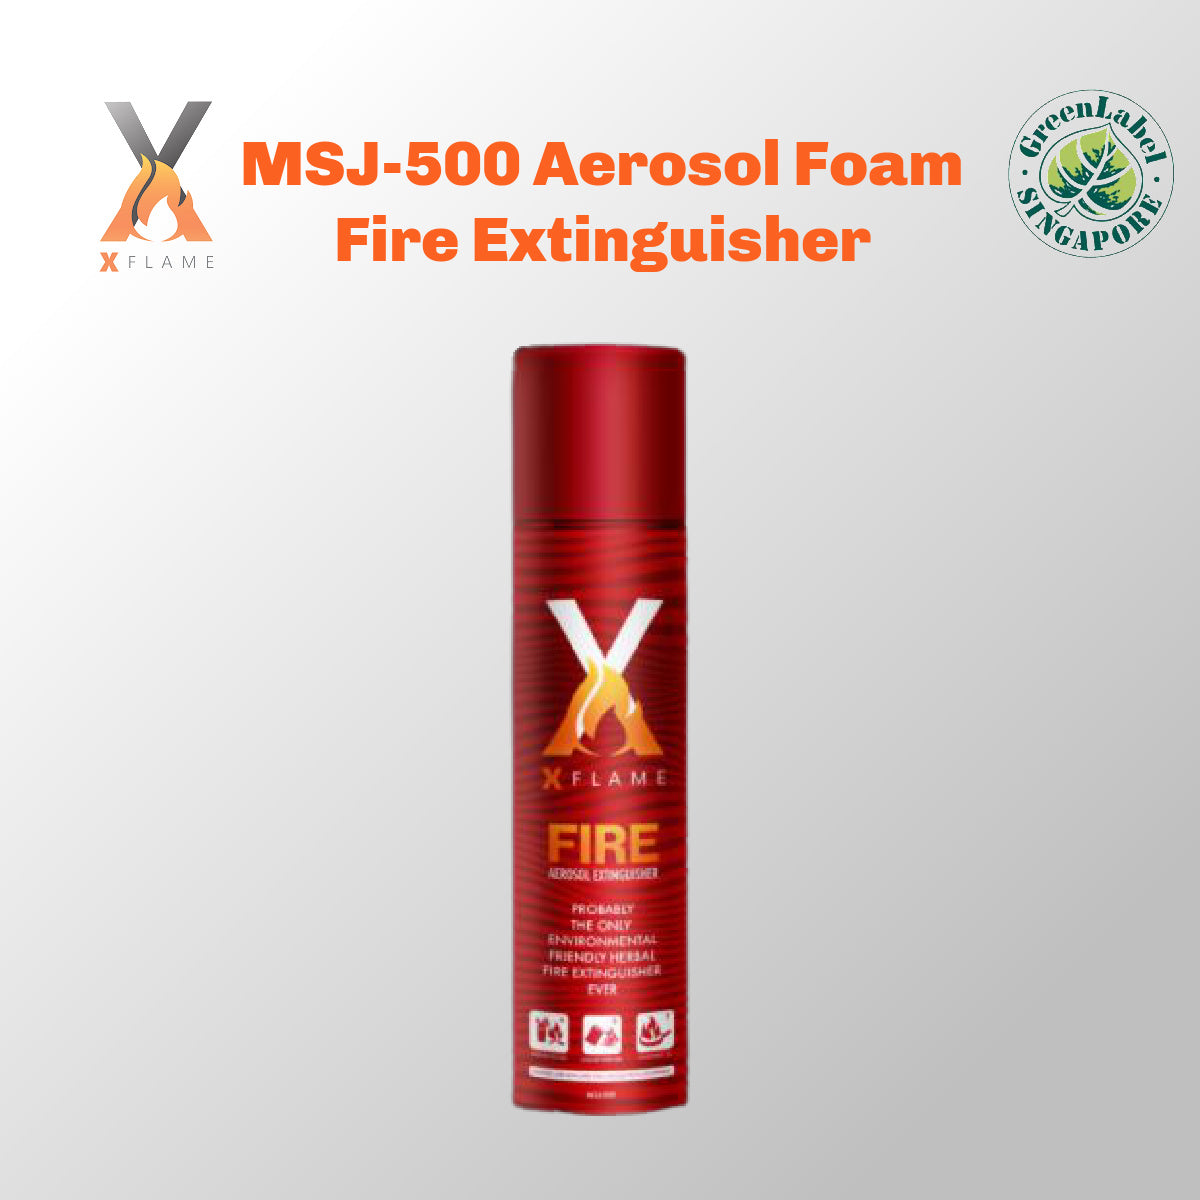 XFLAME MSJ-500 Aerosol Foam Fire Extinguisher